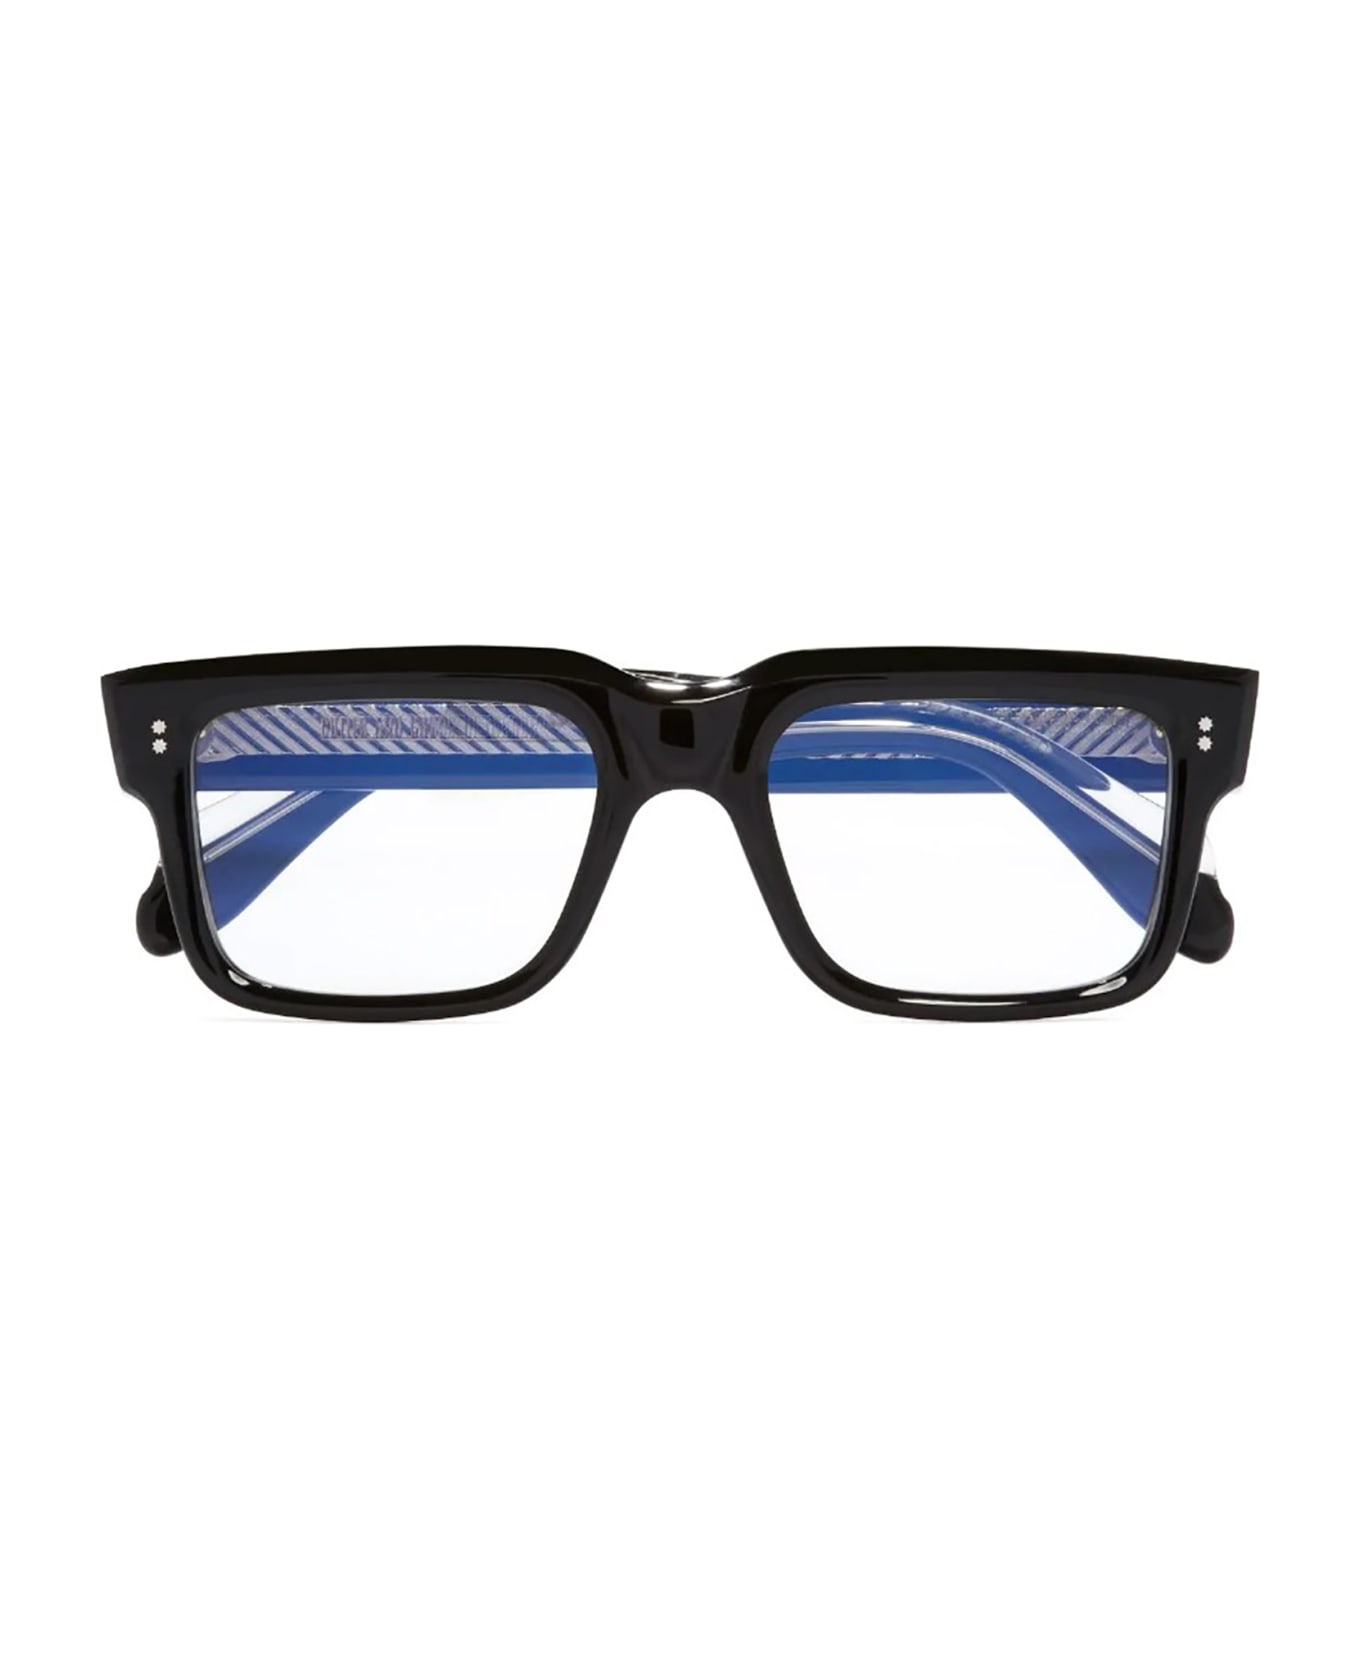 Cutler and Gross 1403 Eyewear - Black